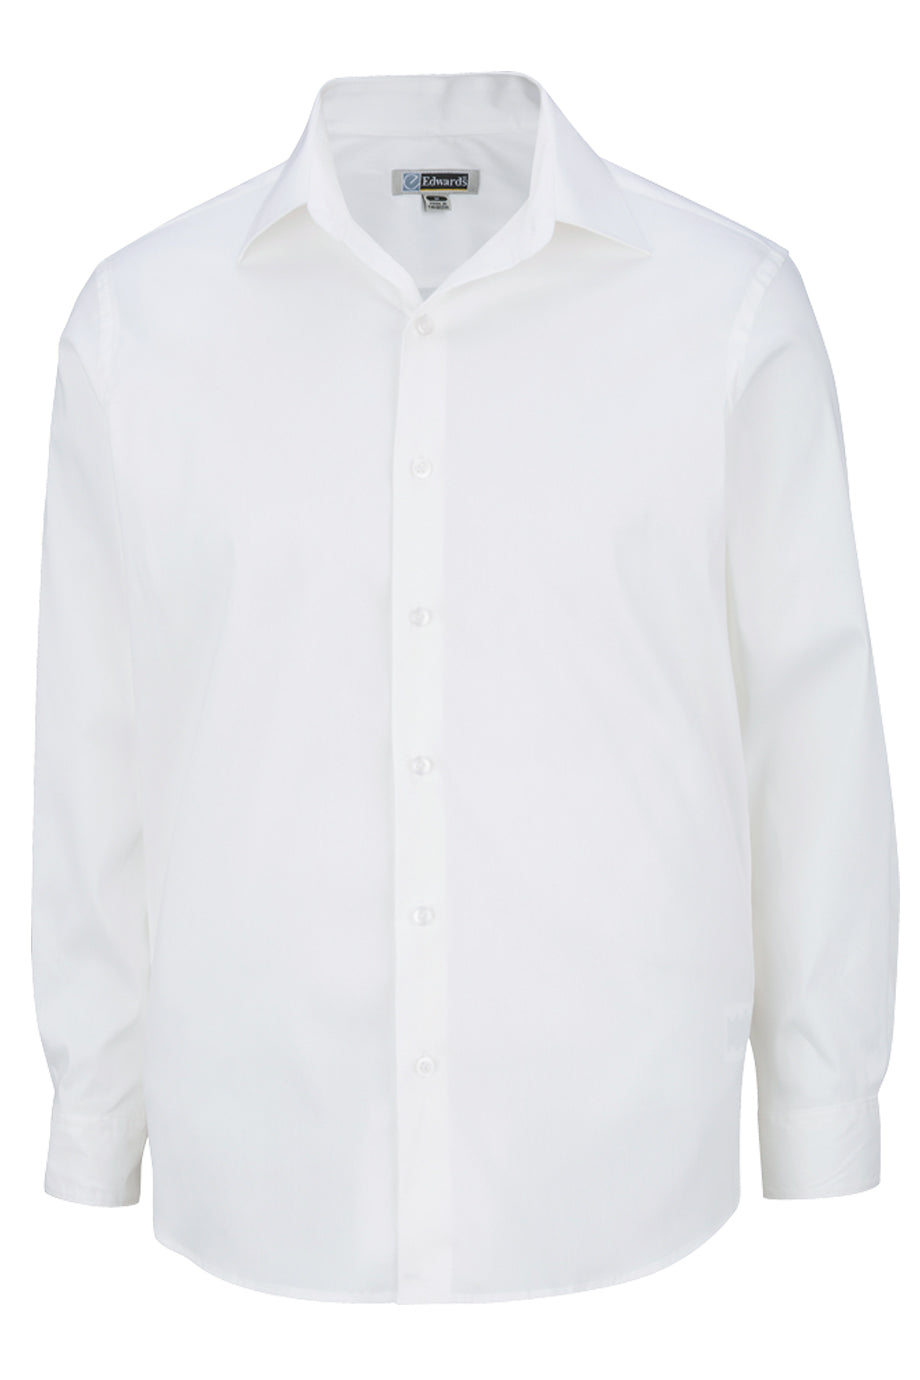 Edwards Garment 1314 Men's Essential Broadcloth Shirt Short Sleeve - Blue, M